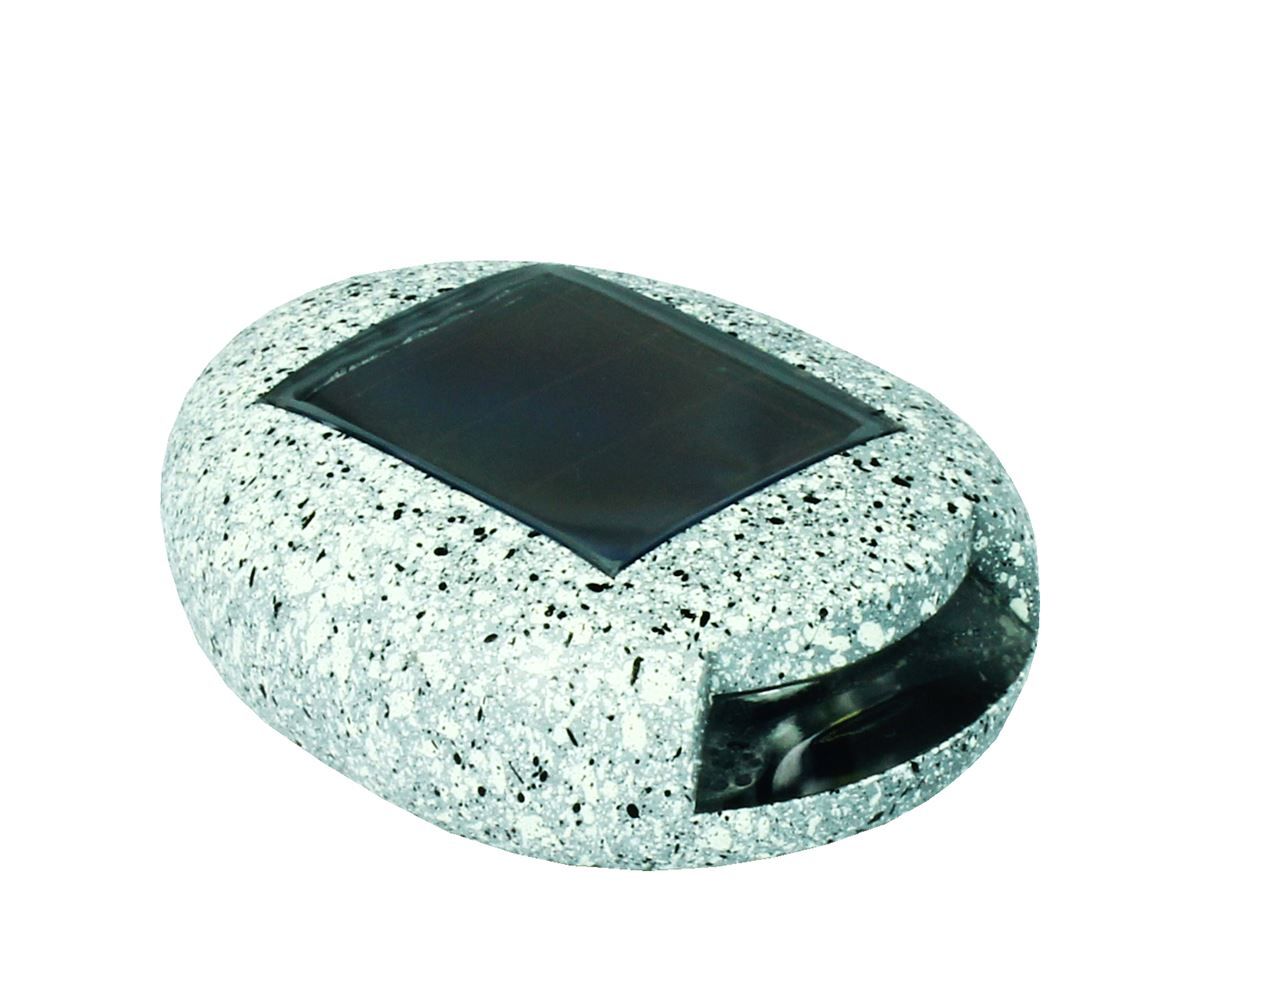 peeble stone led